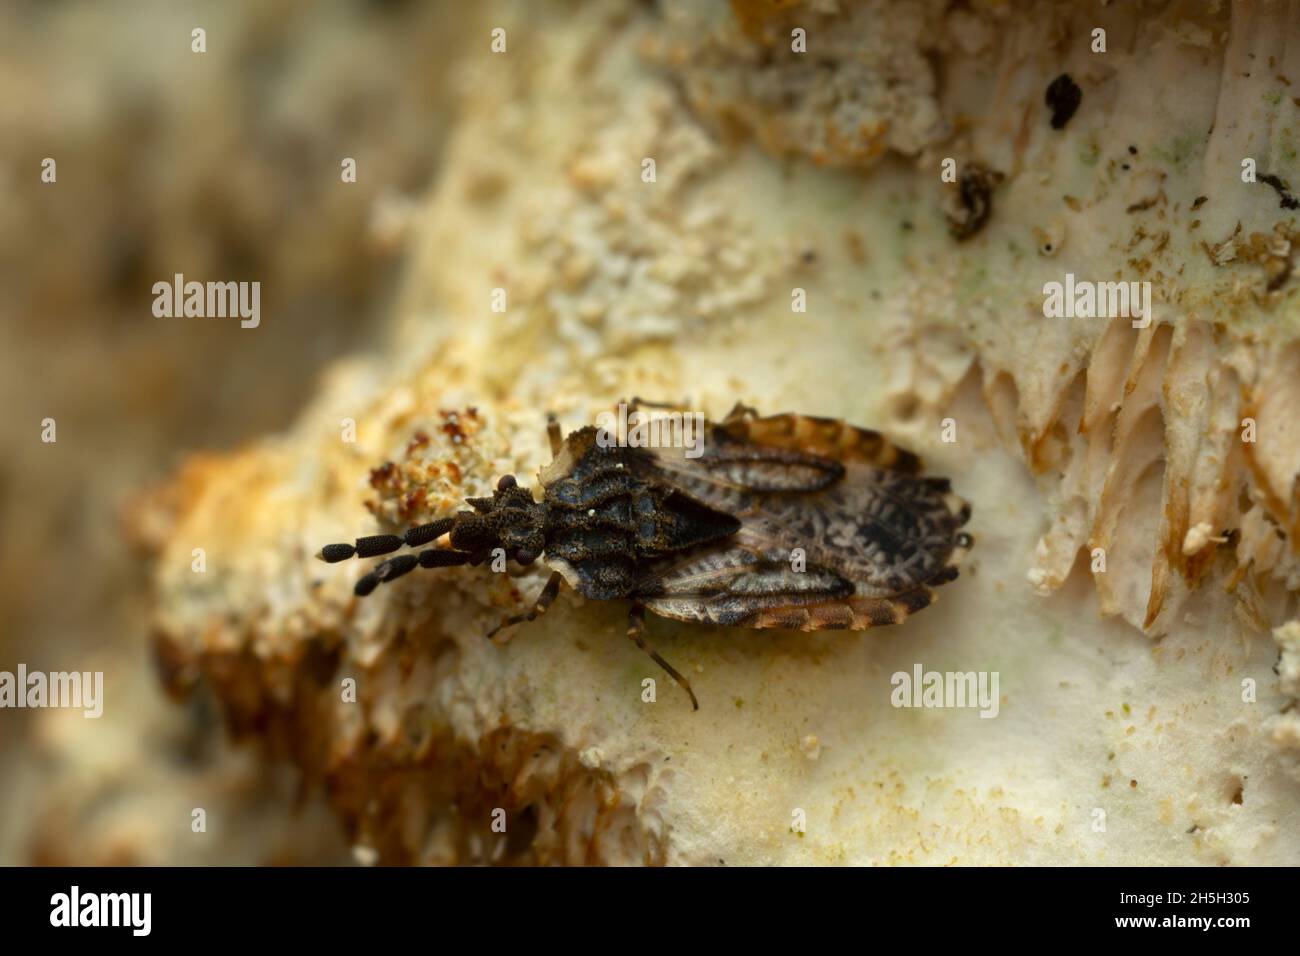 Flat bug, Aradus depressus on fungi photographed with high magnification Stock Photo